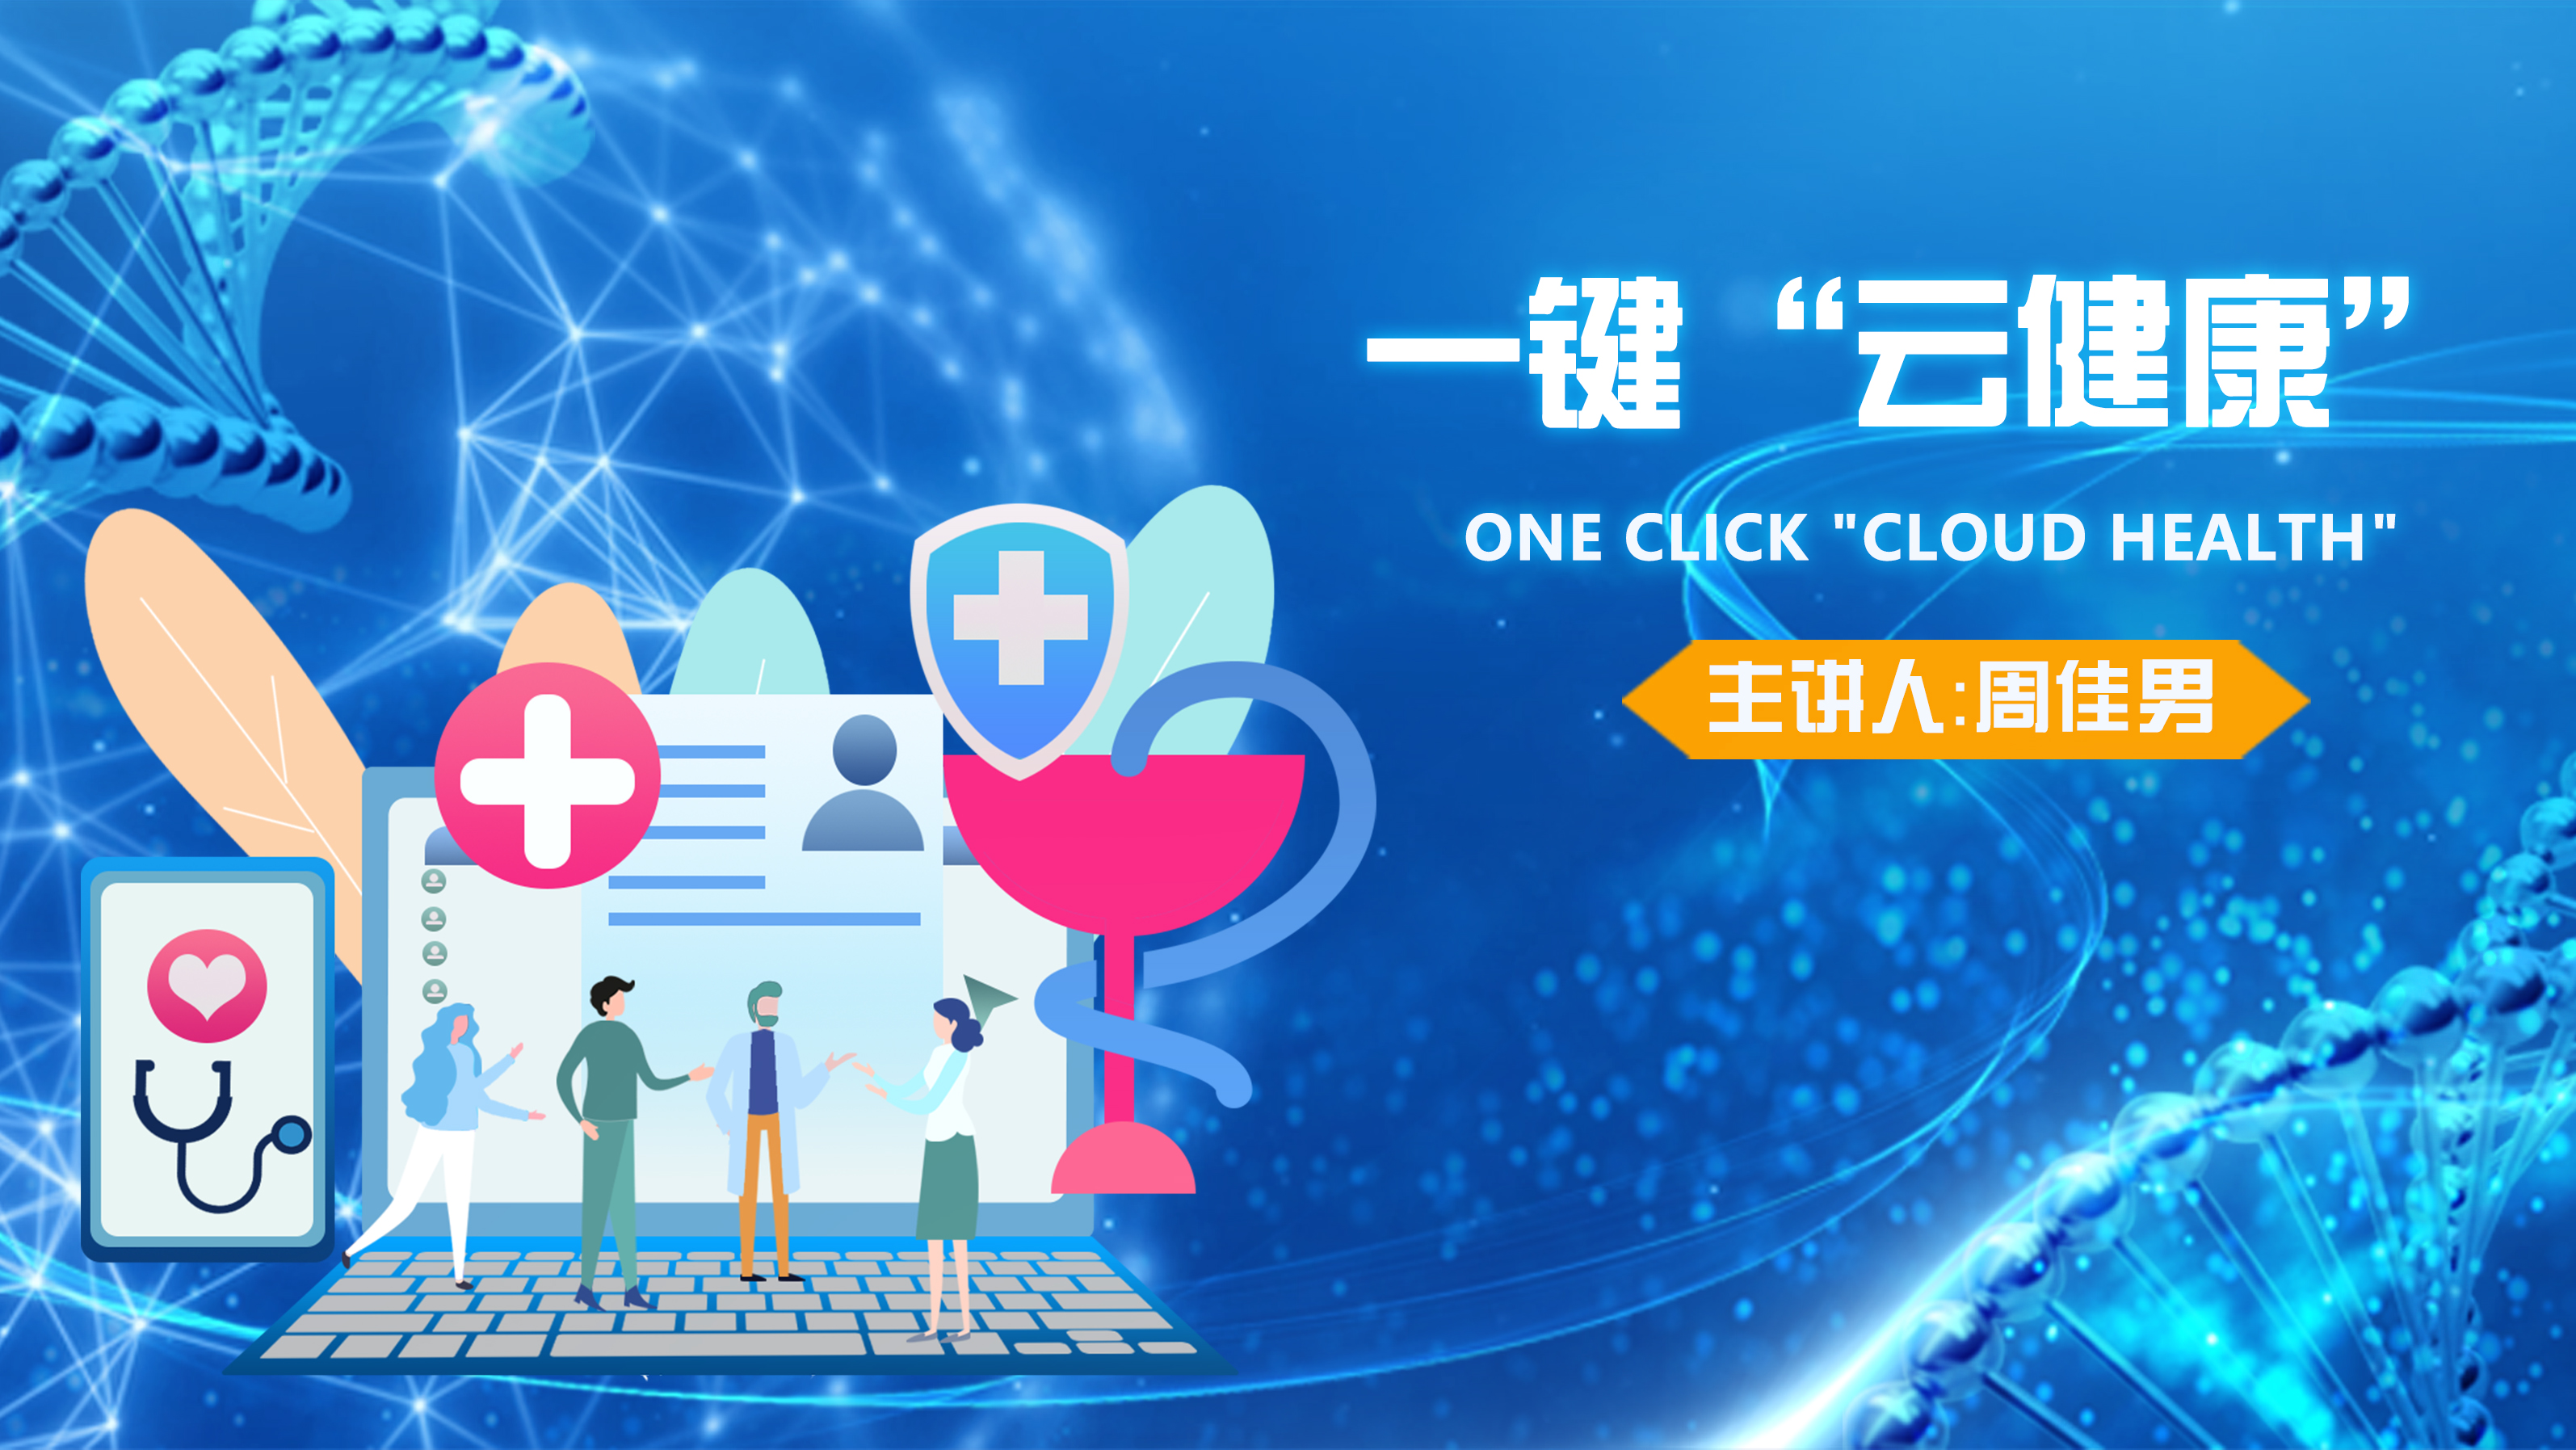 One click “cloud health”